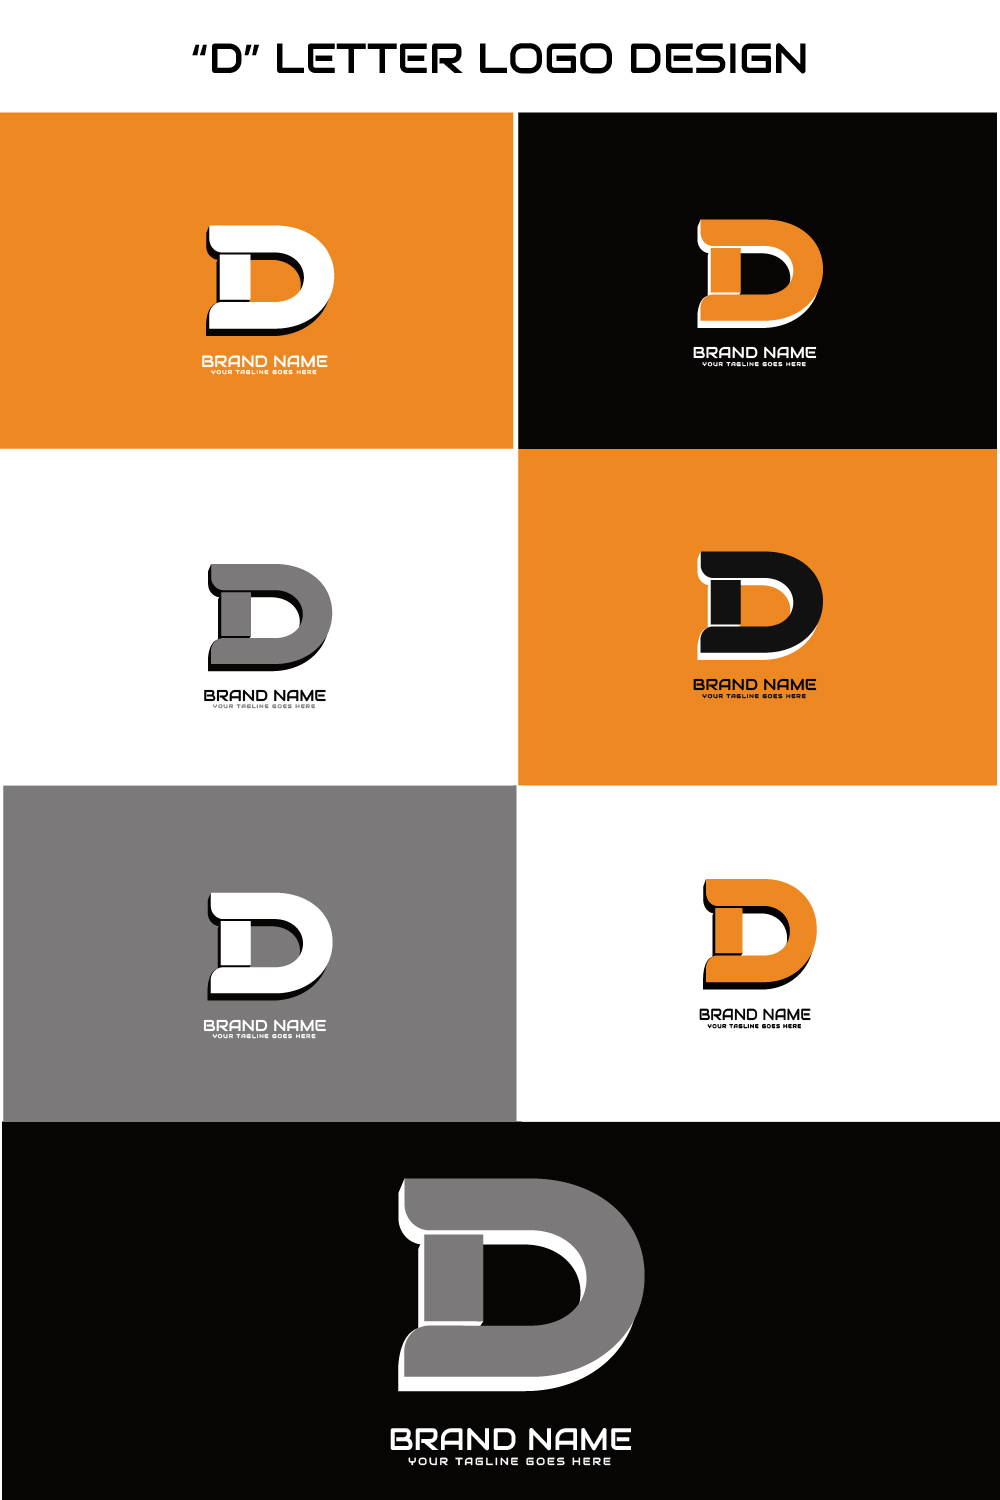 D letter logo pinterest preview image.